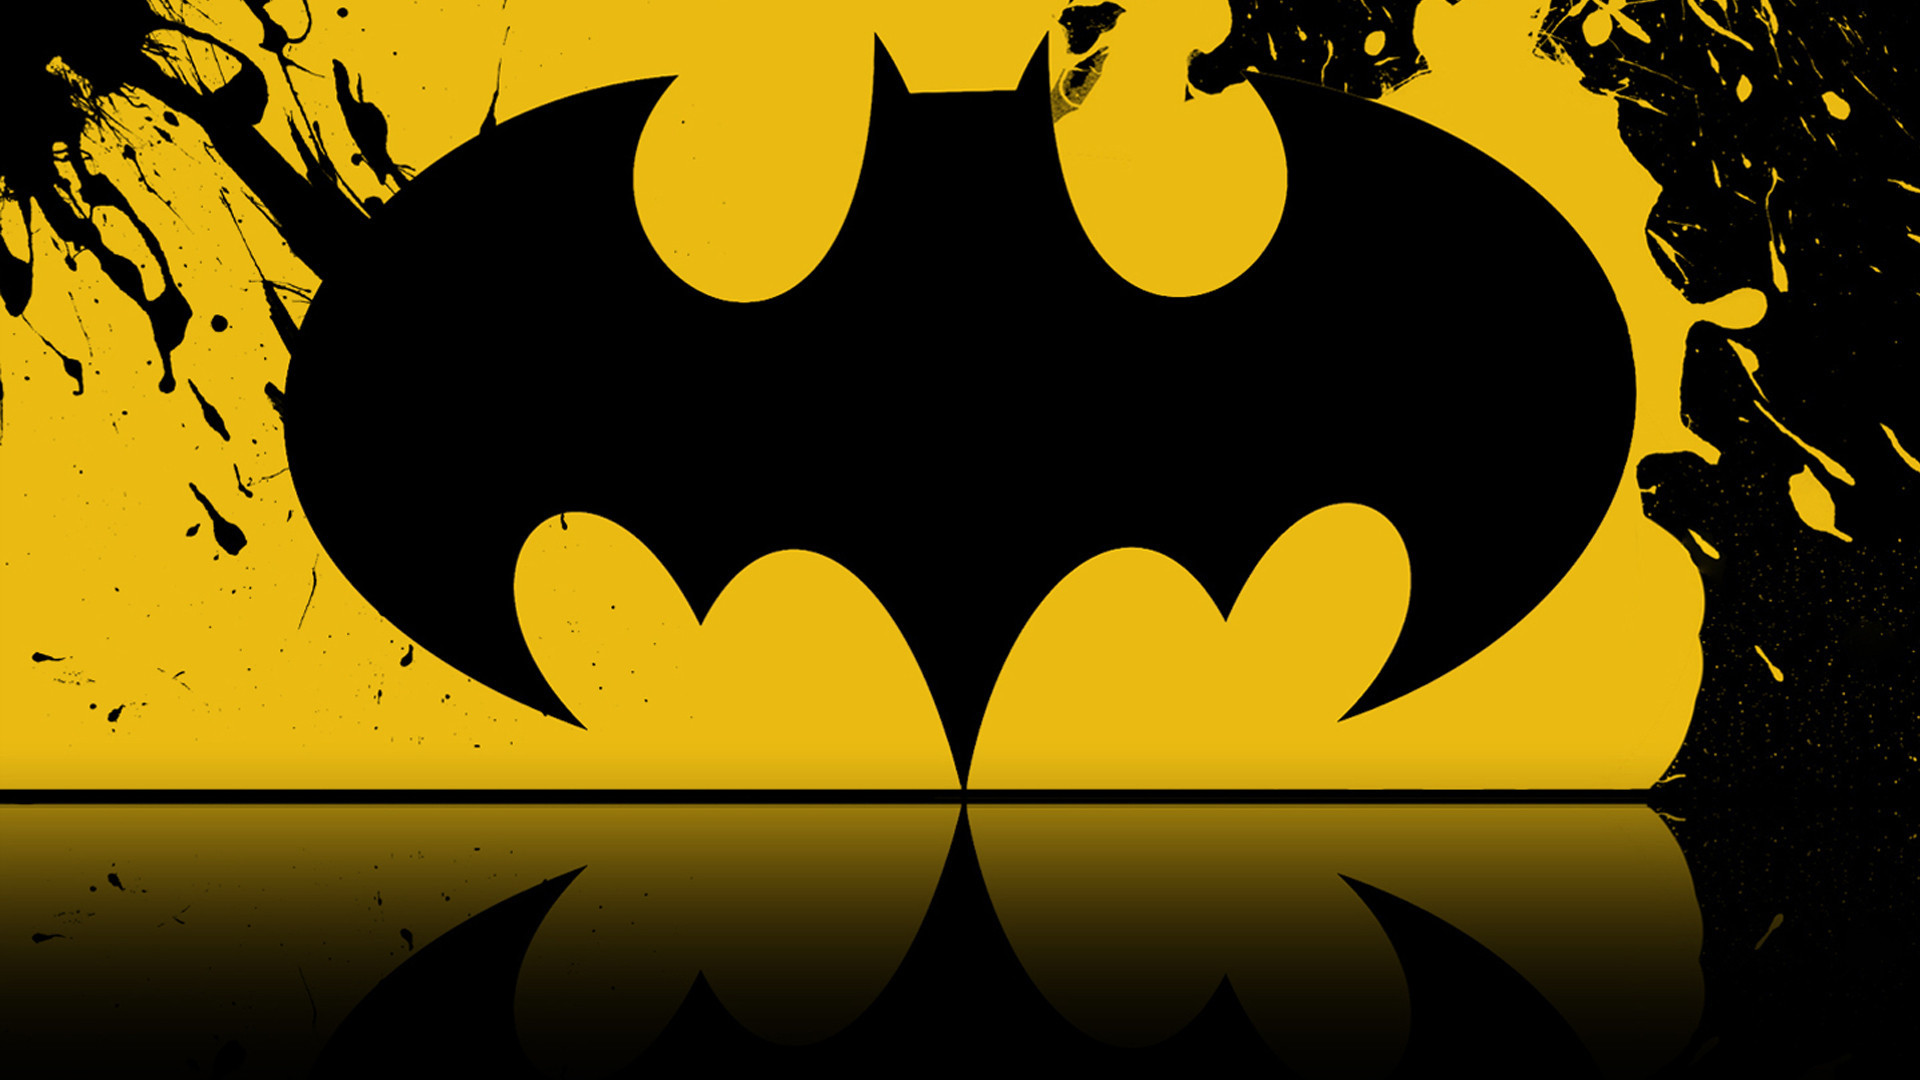 288519 Bild herunterladen comics, the batman, batman logo, batman symbol - Hintergrundbilder und Bildschirmschoner kostenlos